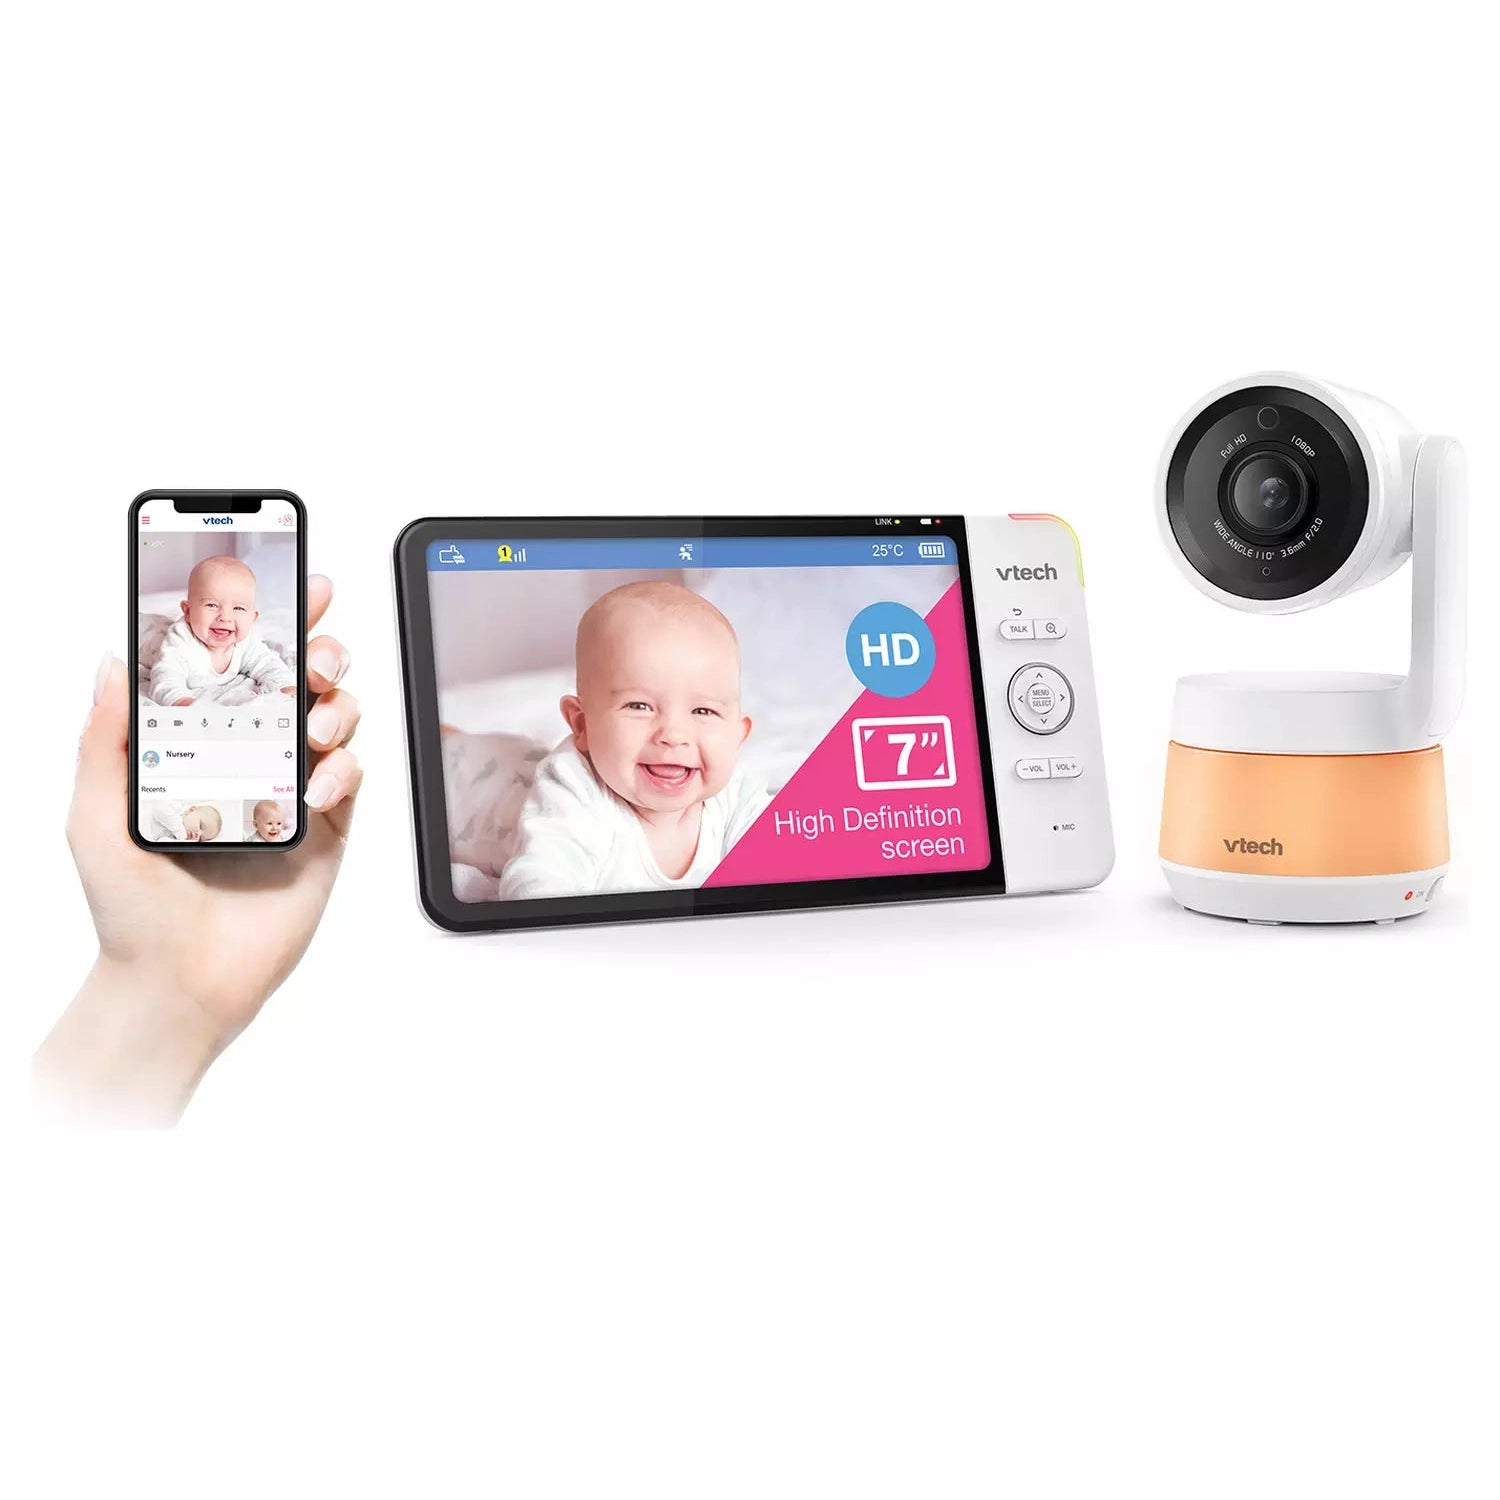 VTech RM7767HD Smart Video Baby Monitor - White - Refurbished Good